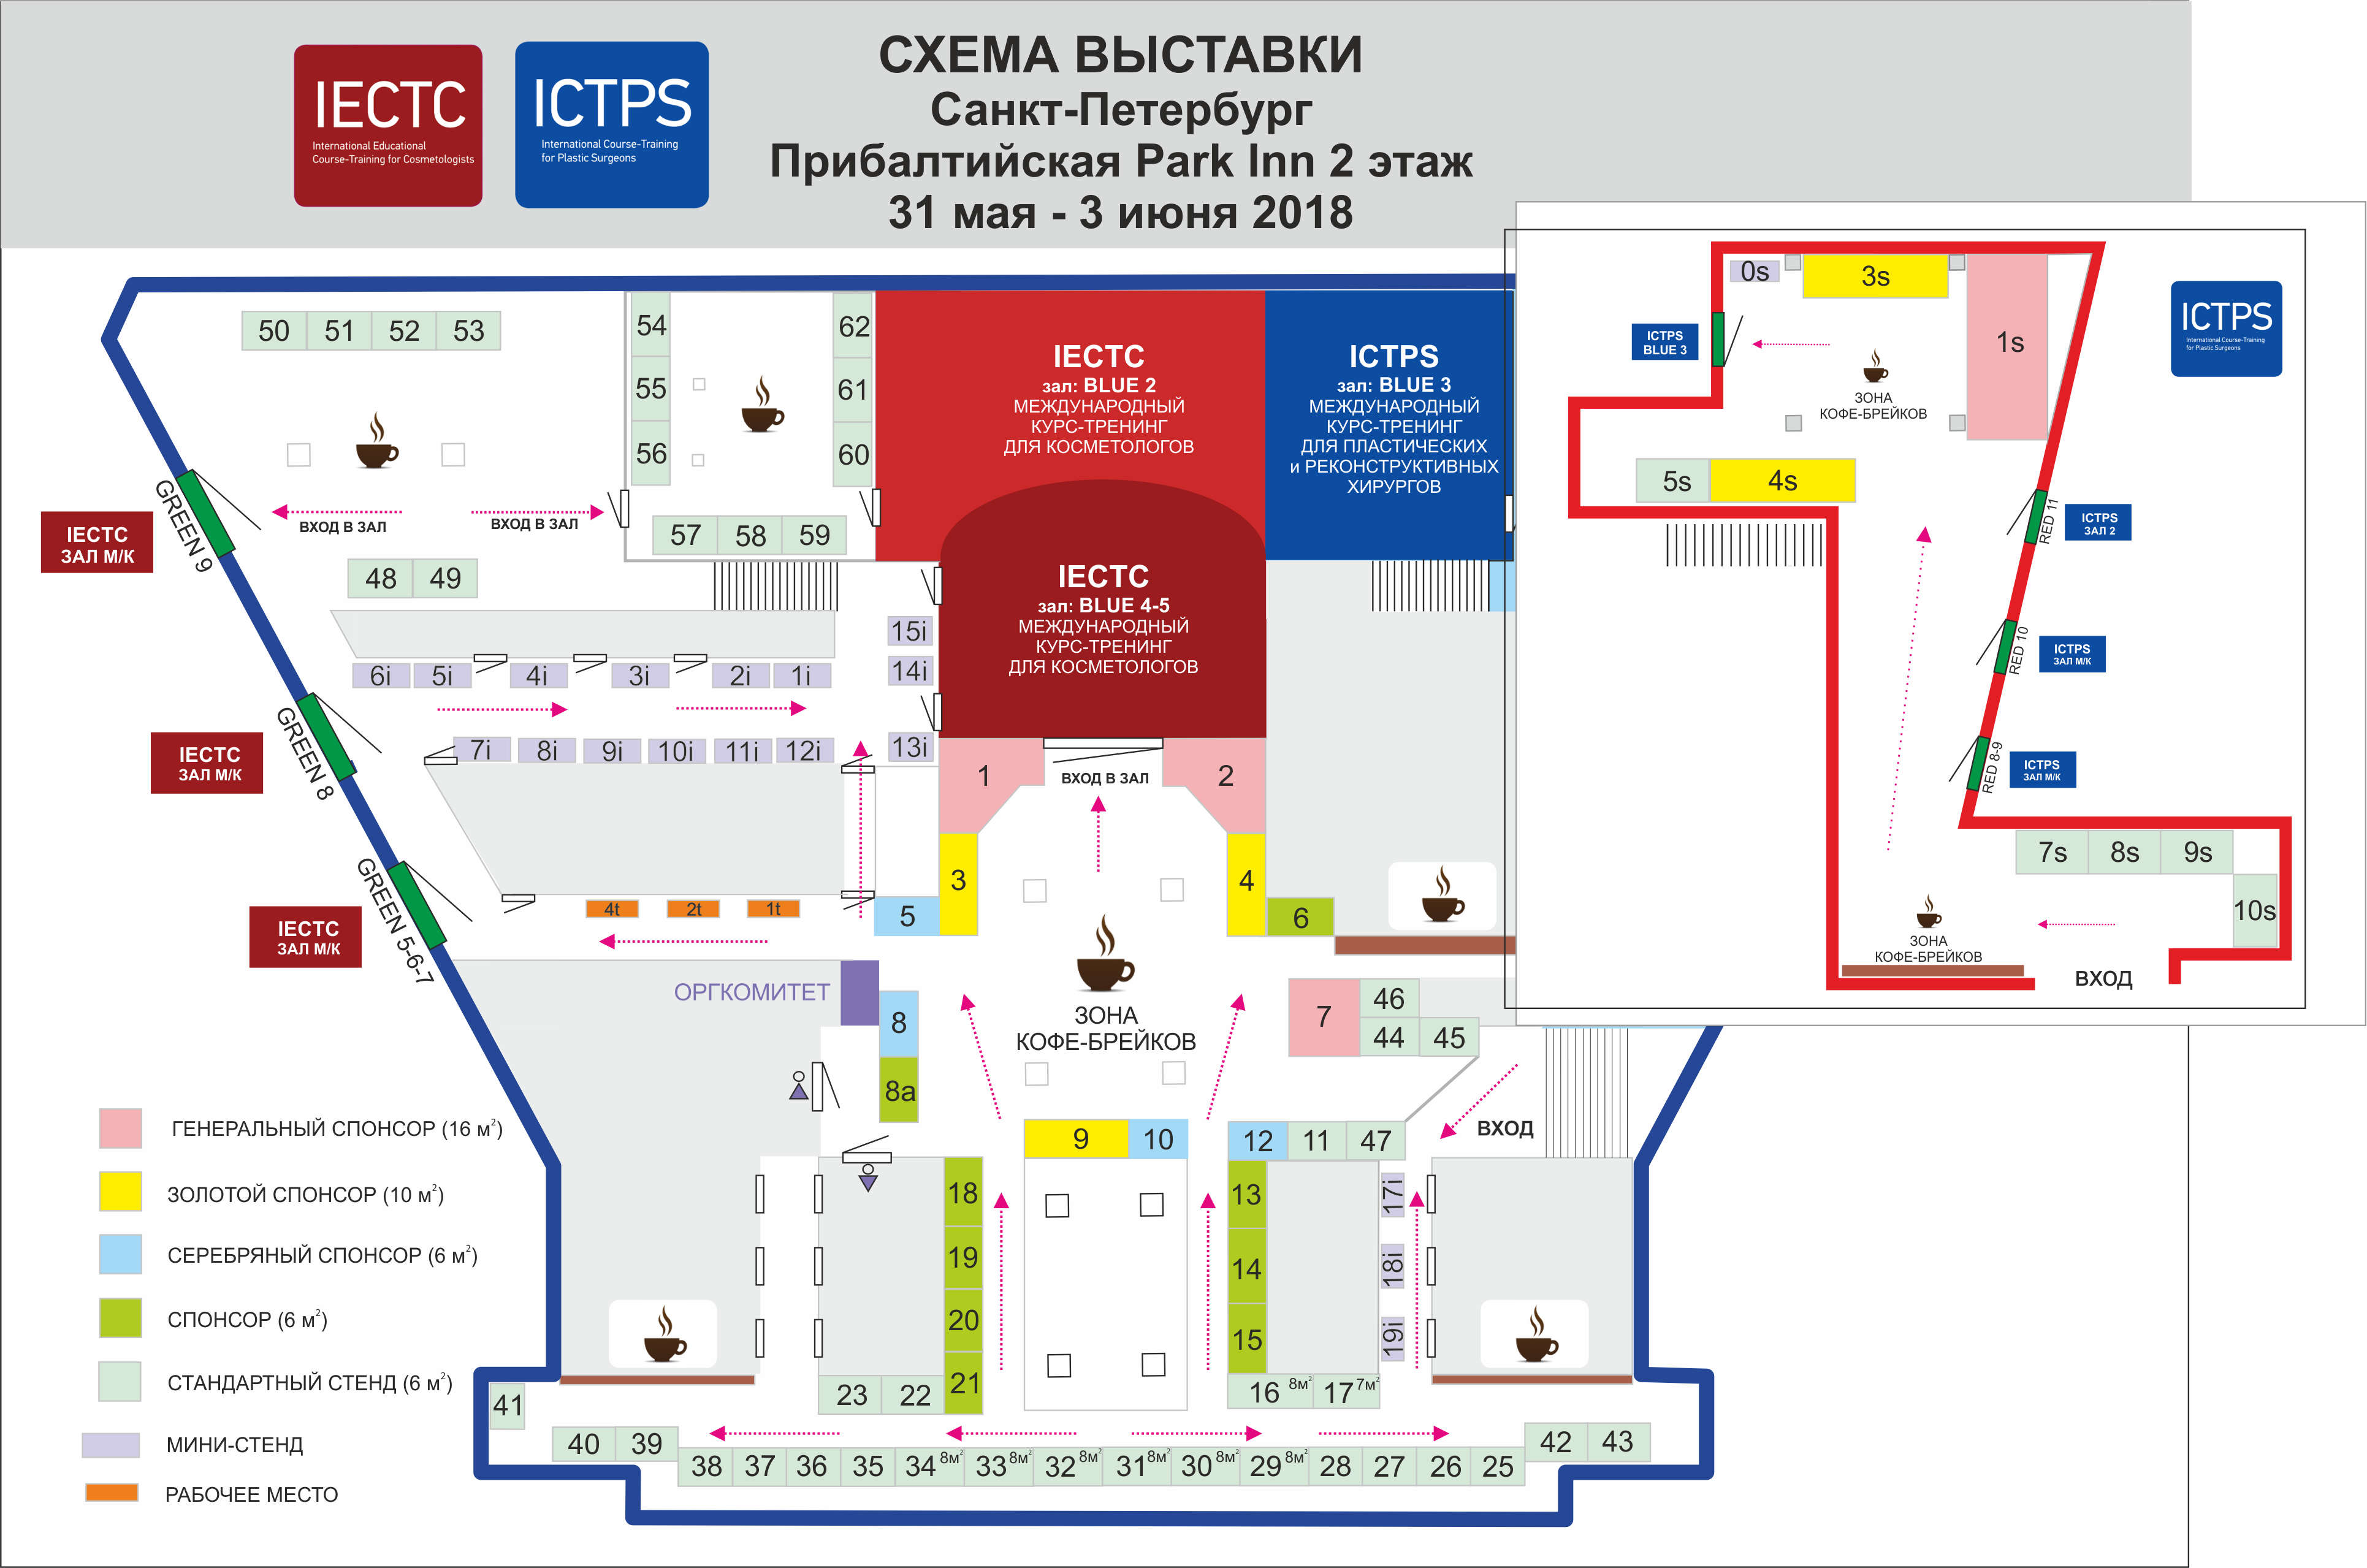 IECTC-2018/ICTPS-2018 Схема выставки